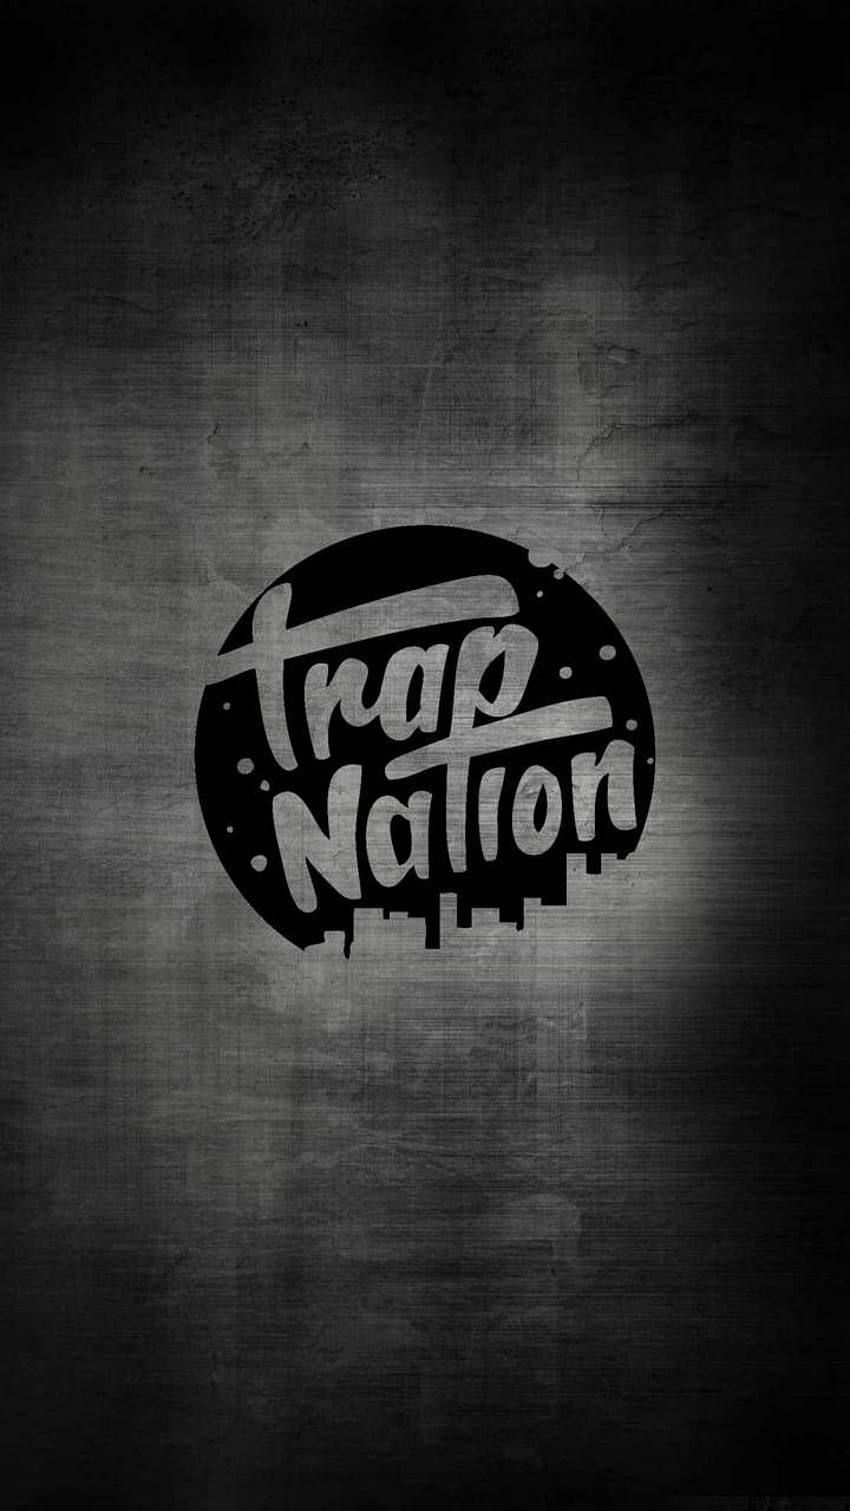 Trap Nation Grey Telefon Fonları [] , Mobil ve Tabletiniz için. Trap Music'i keşfedin. Trap Müziği , Canlı Trap Müziği , Trap Arka Planı, Chill Nation HD telefon duvar kağıdı